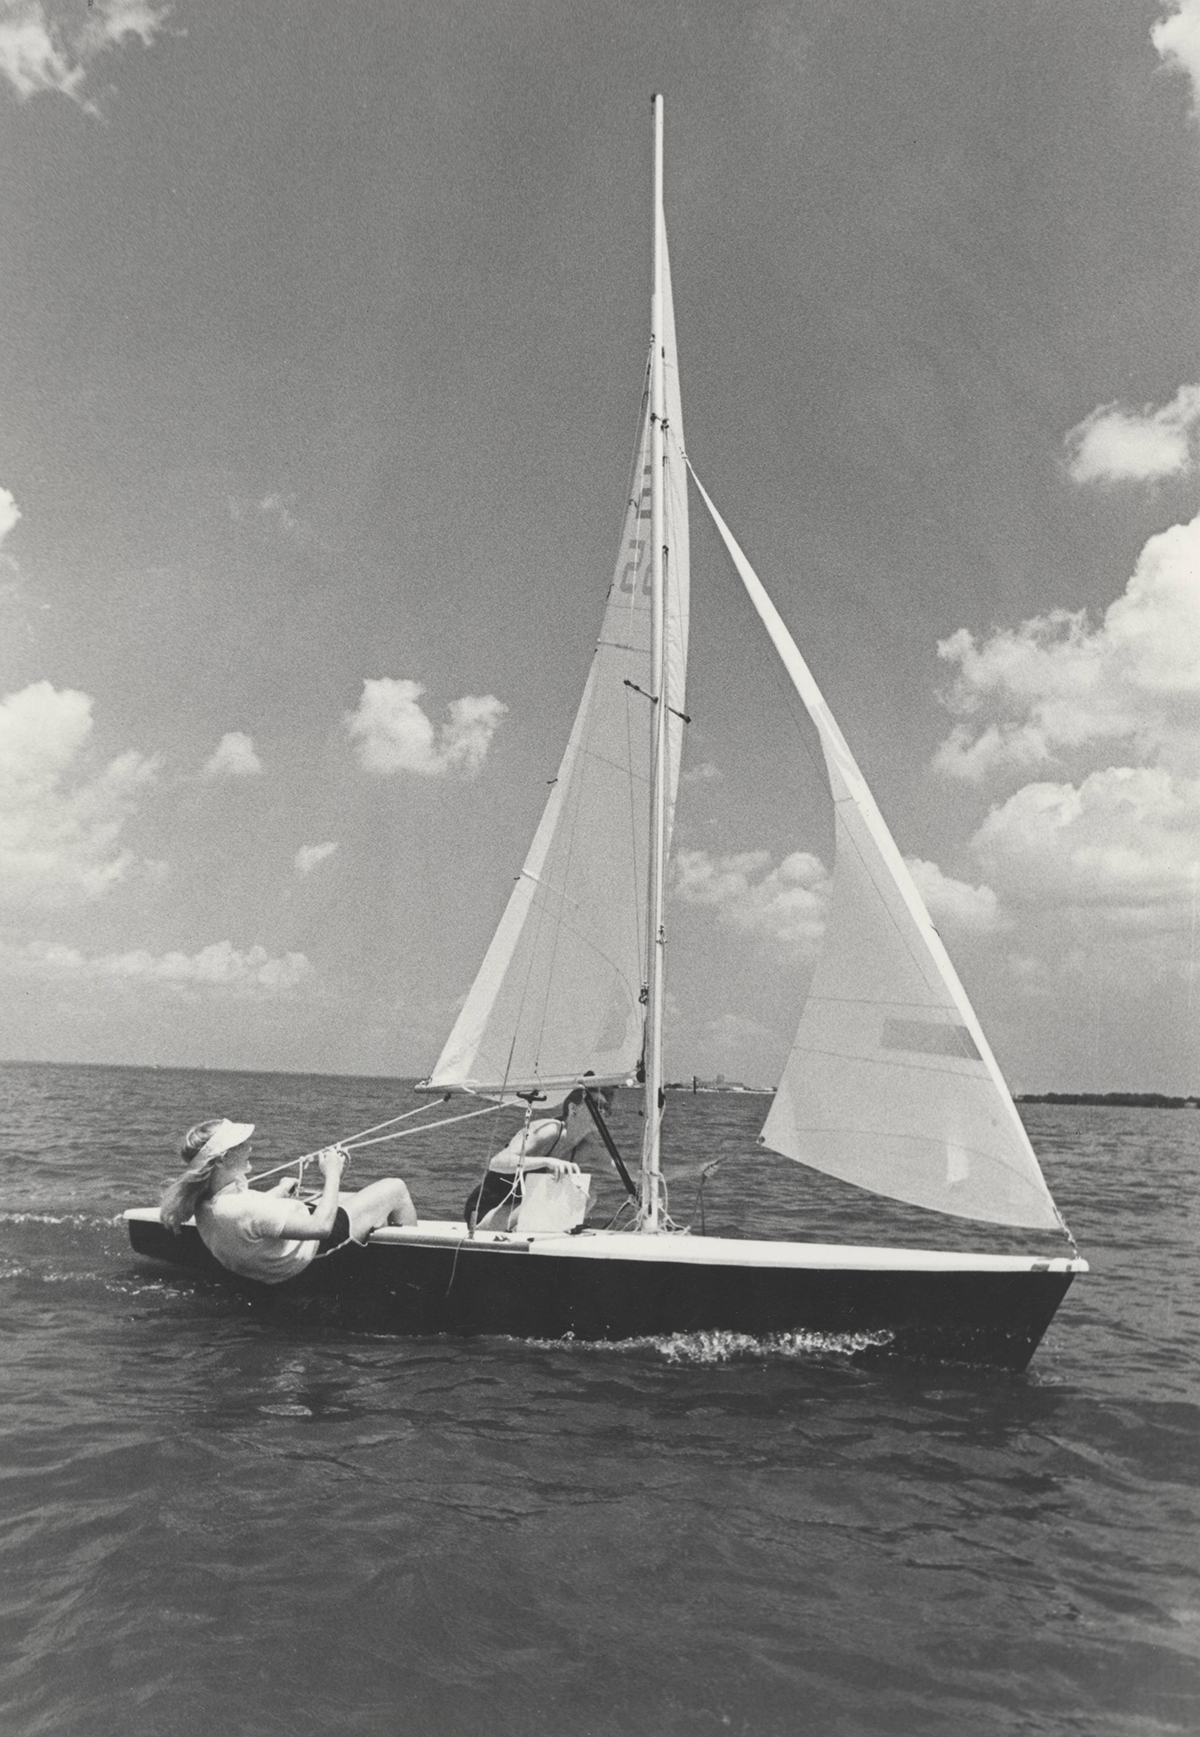 Saililng Team, 1982